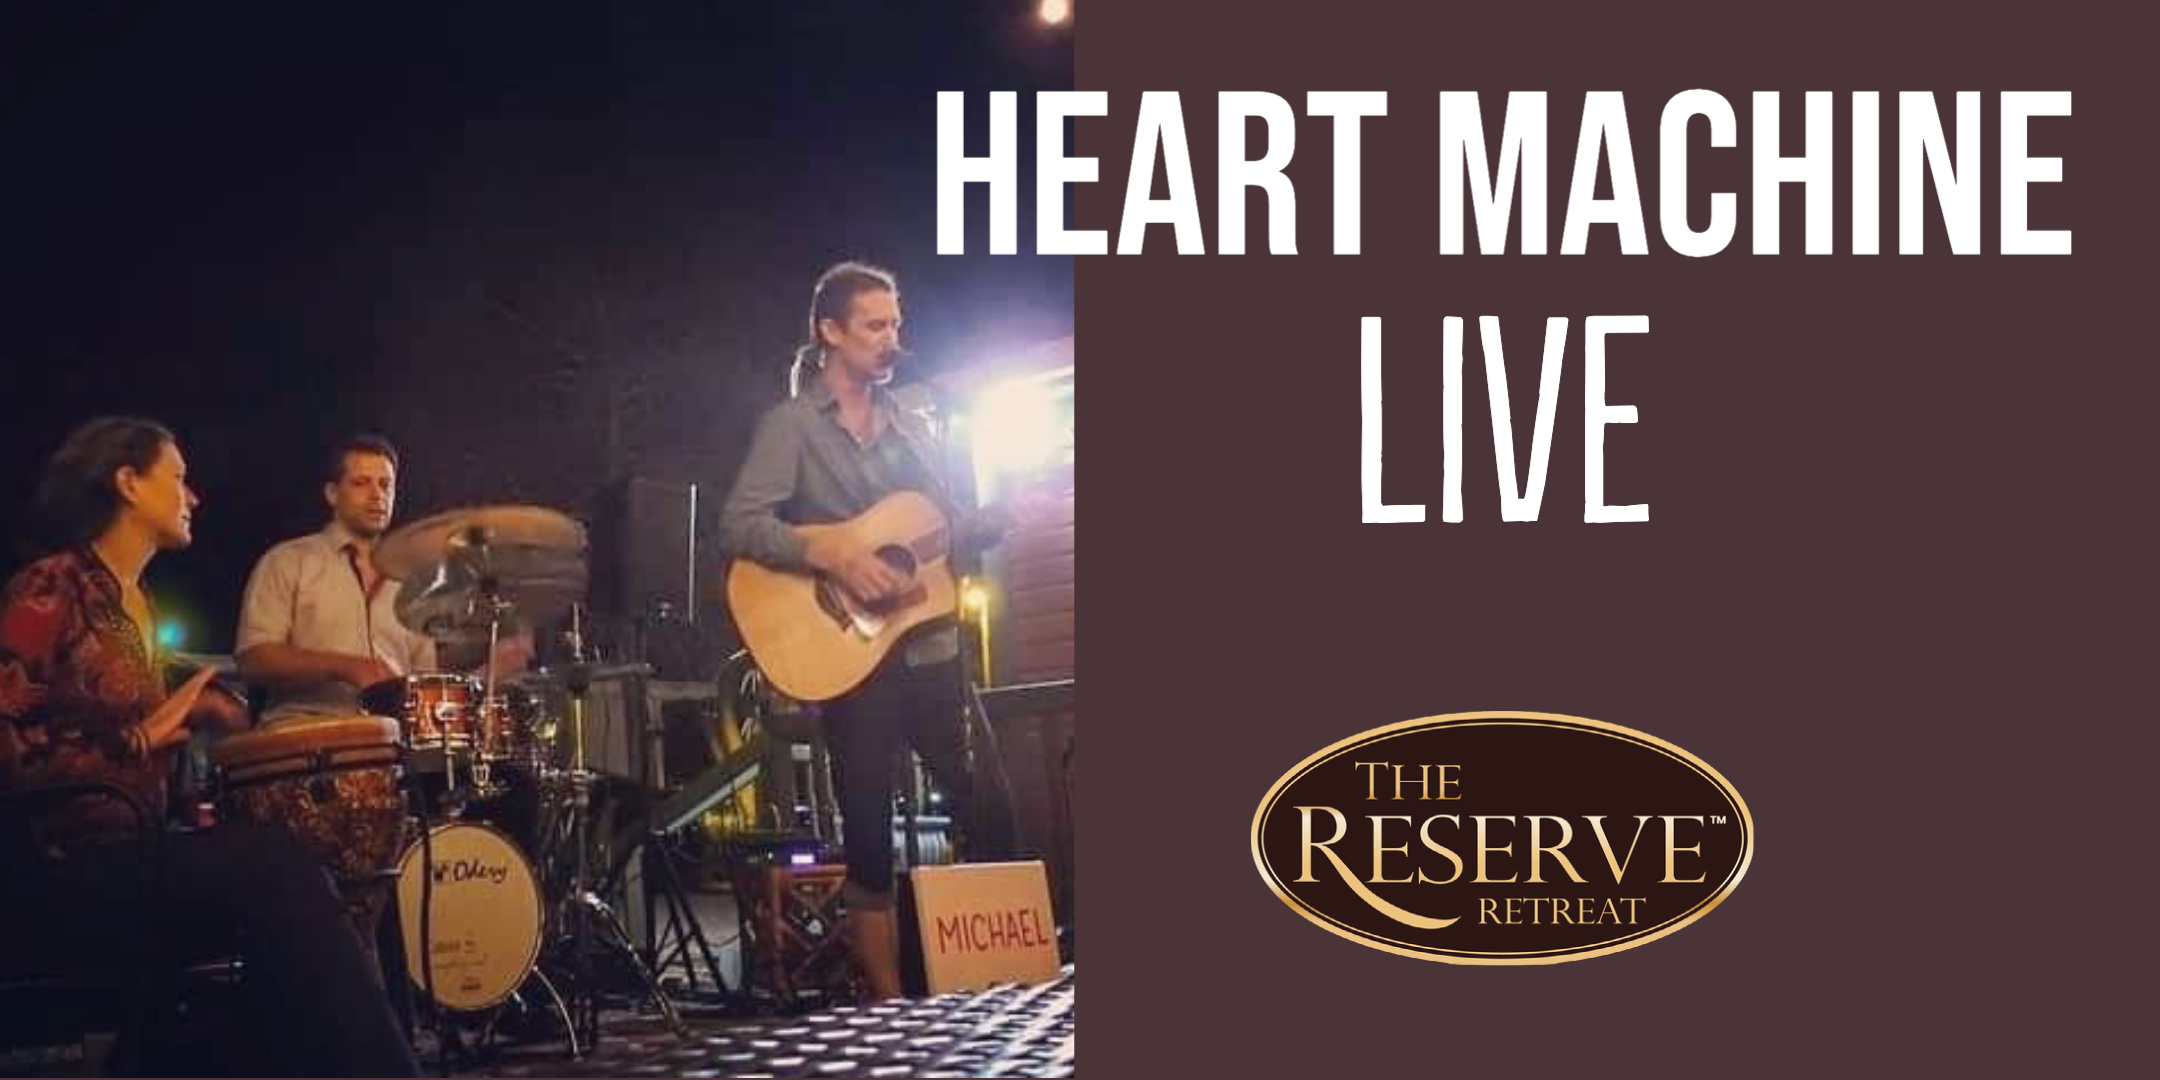 Heart Machine live at The Reserve Retreat in Sarasota, FL